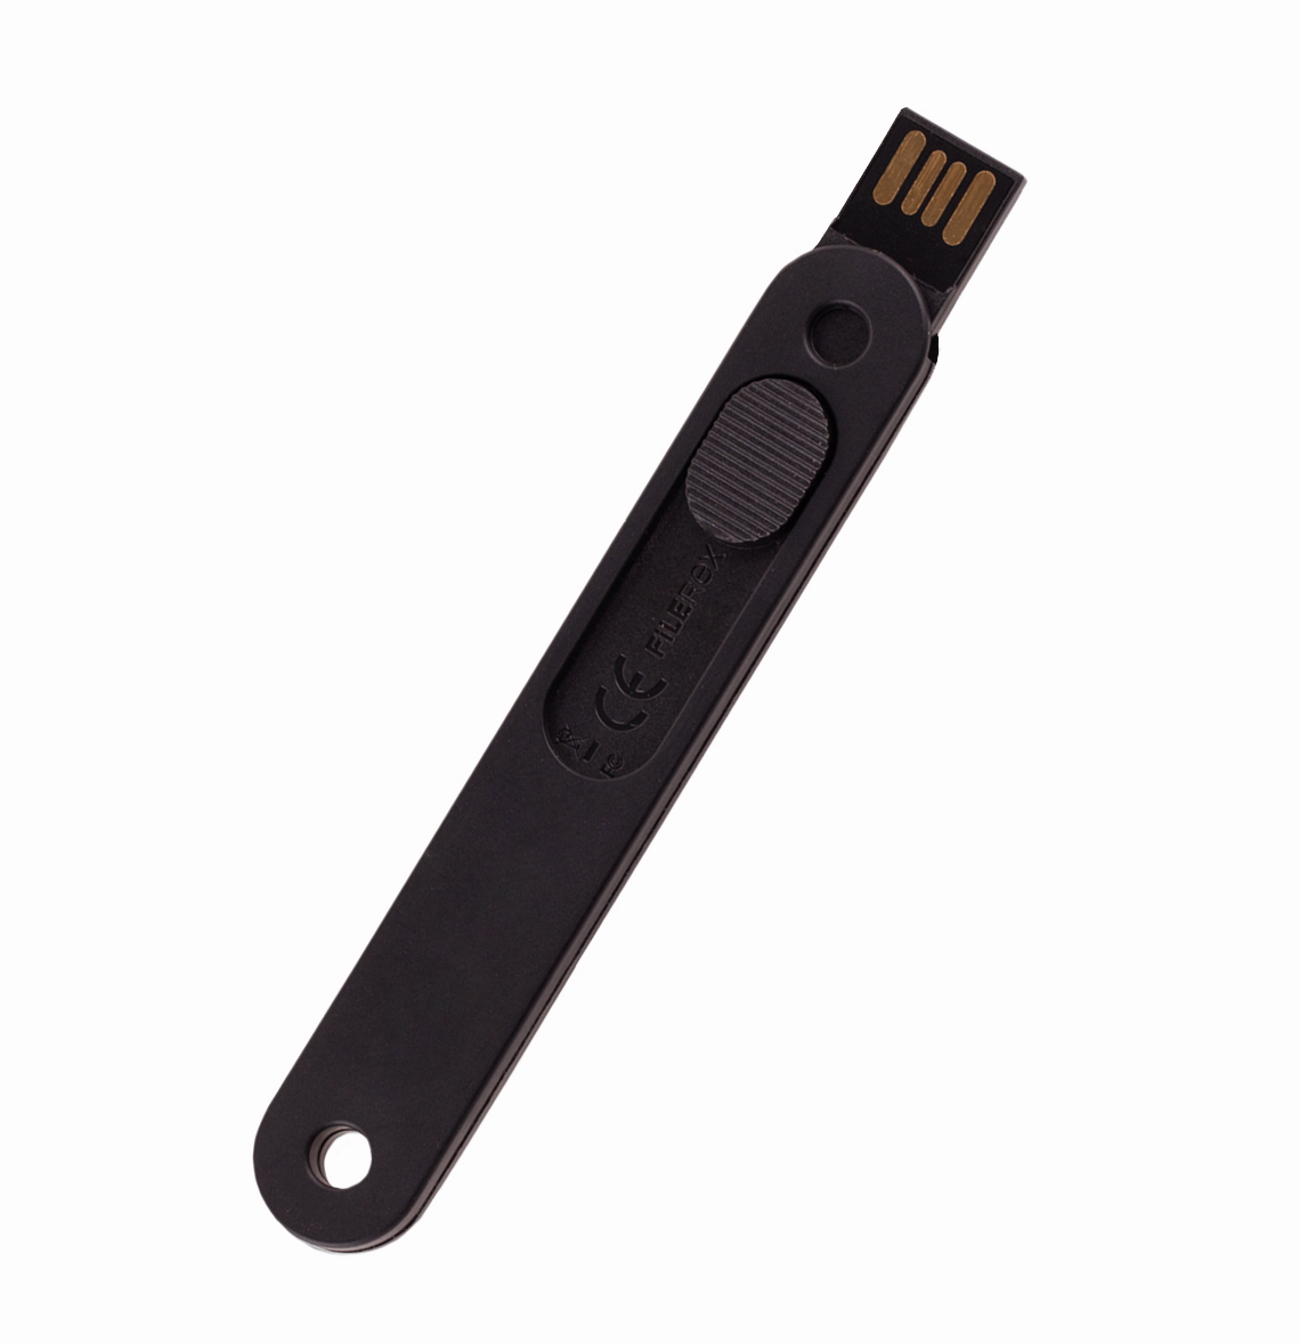 FILEREX 16GB - BlackE Original - (Black) FiLEREX USB-Stick / GB) #GEN2 Black, (Black 16 2.0